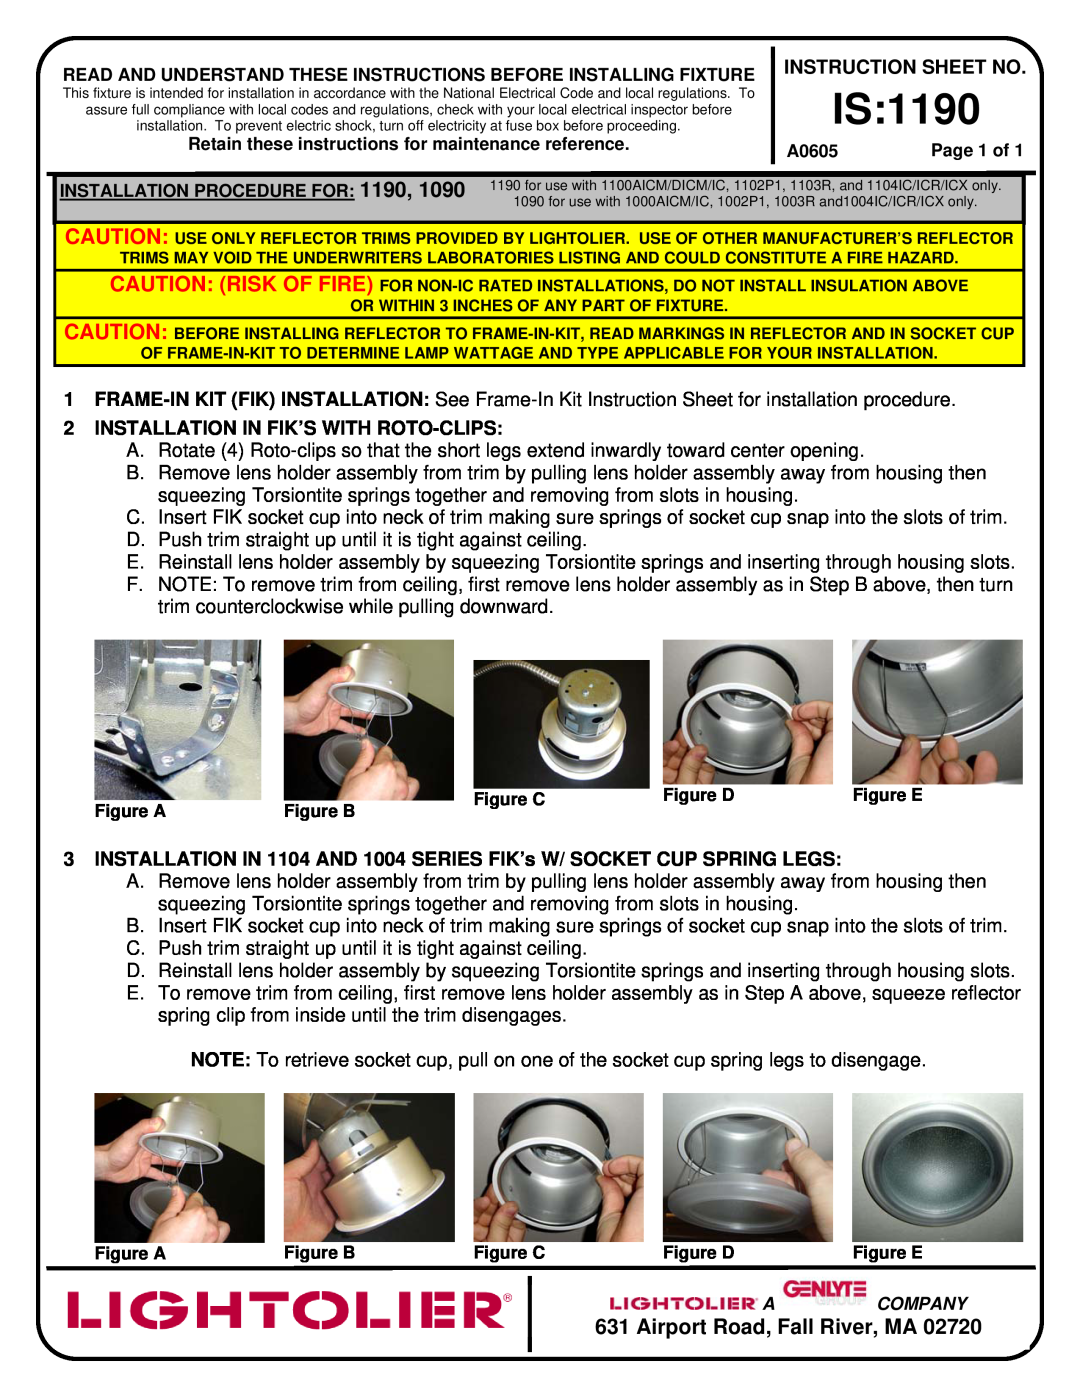 Lightolier instruction sheet IS1190, Airport Road, Fall River, MA, Instruction Sheet No 